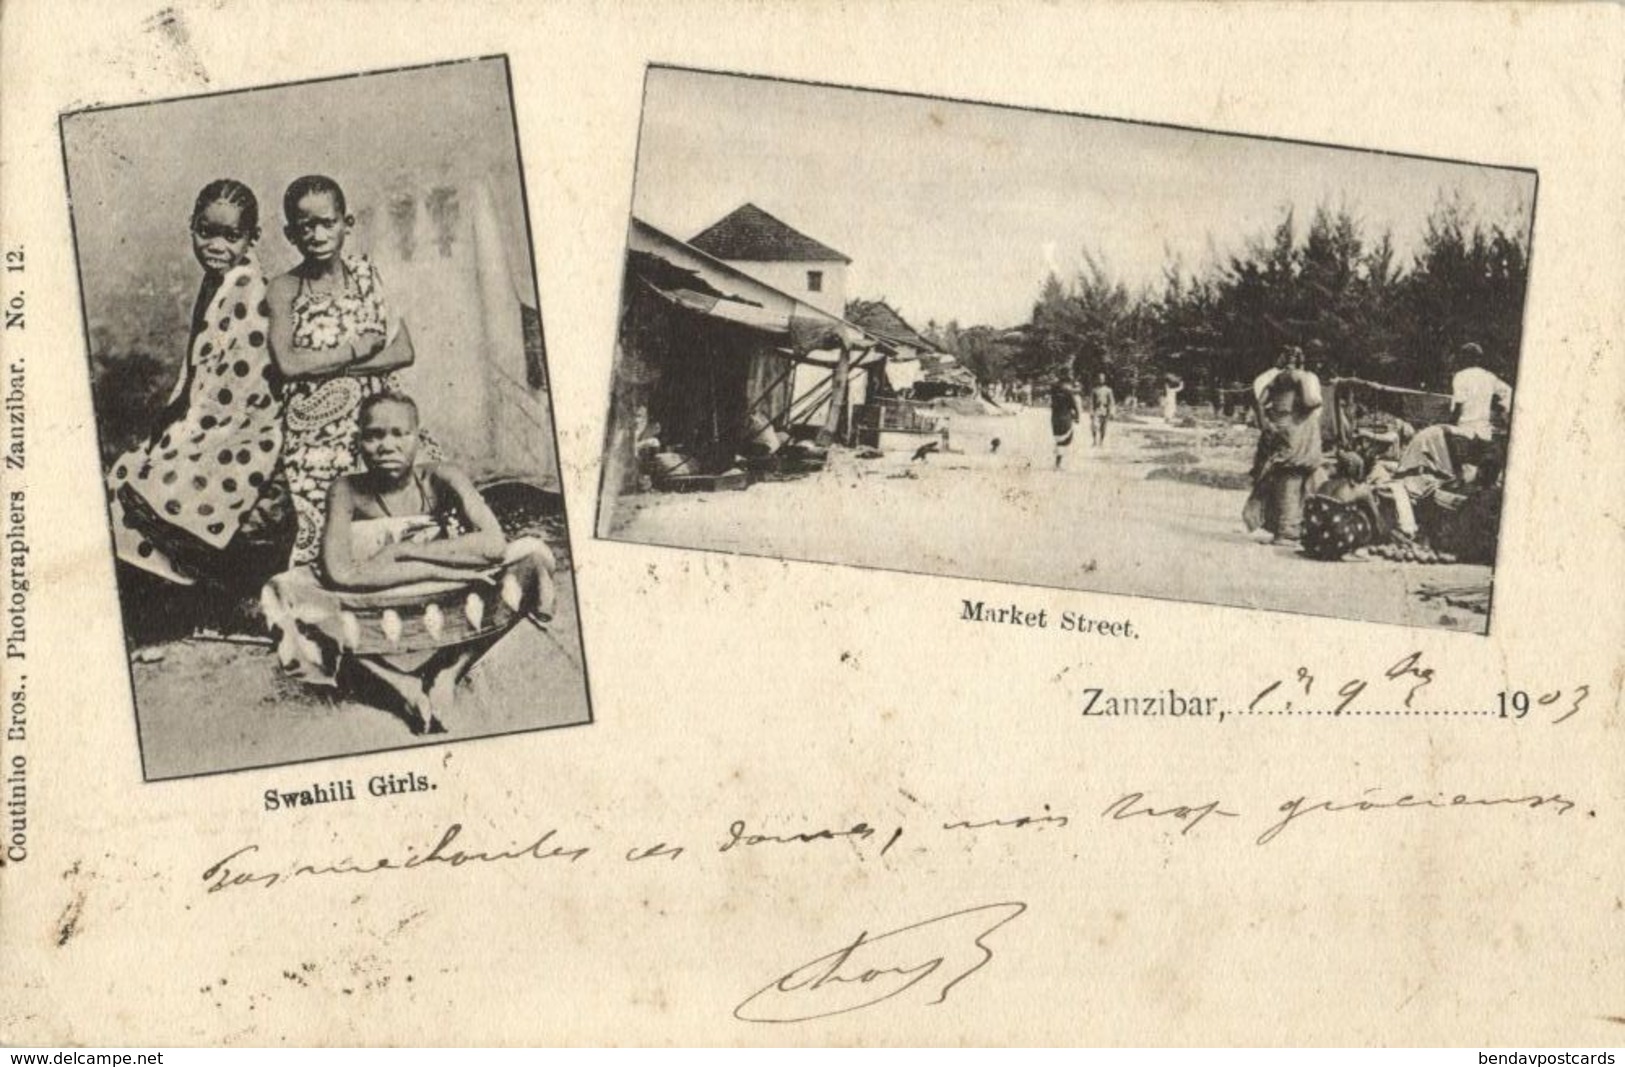 Tanzania, ZANZIBAR, Swahili Girls, Market Street (1903) Postcard - Tanzania